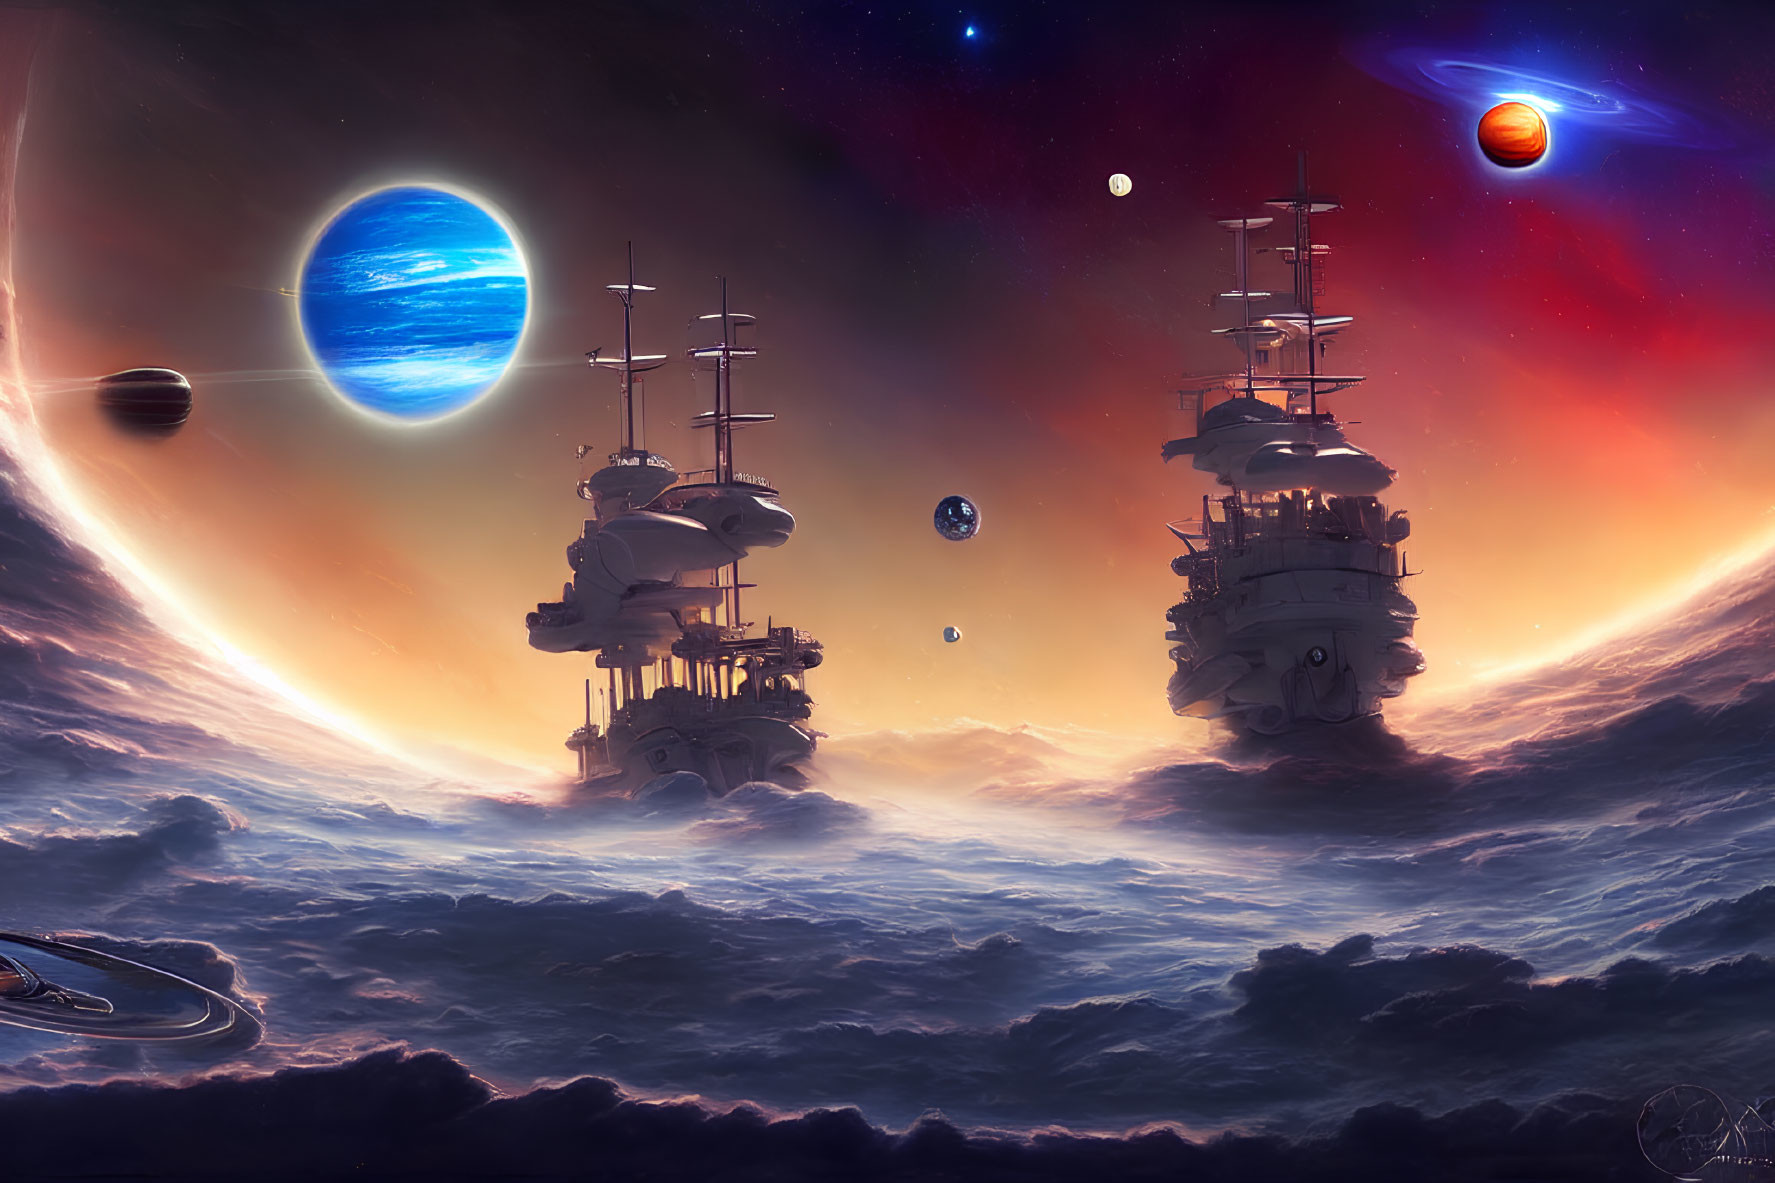 Sci-fi scene: Floating ships, starry sky, vibrant planets